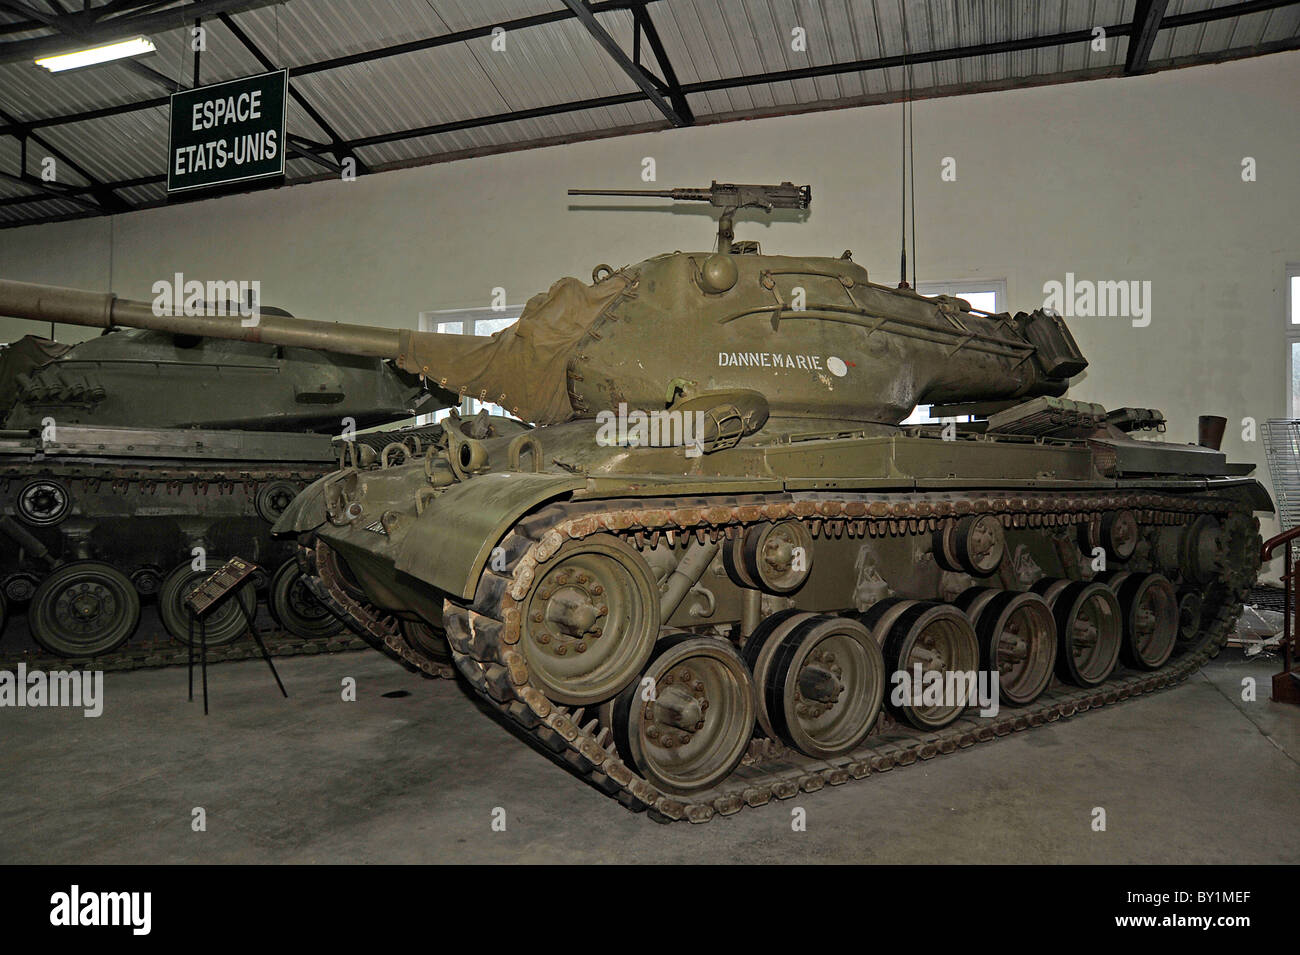 WW2 American tank on display at Saumur France Stock Photo - Alamy